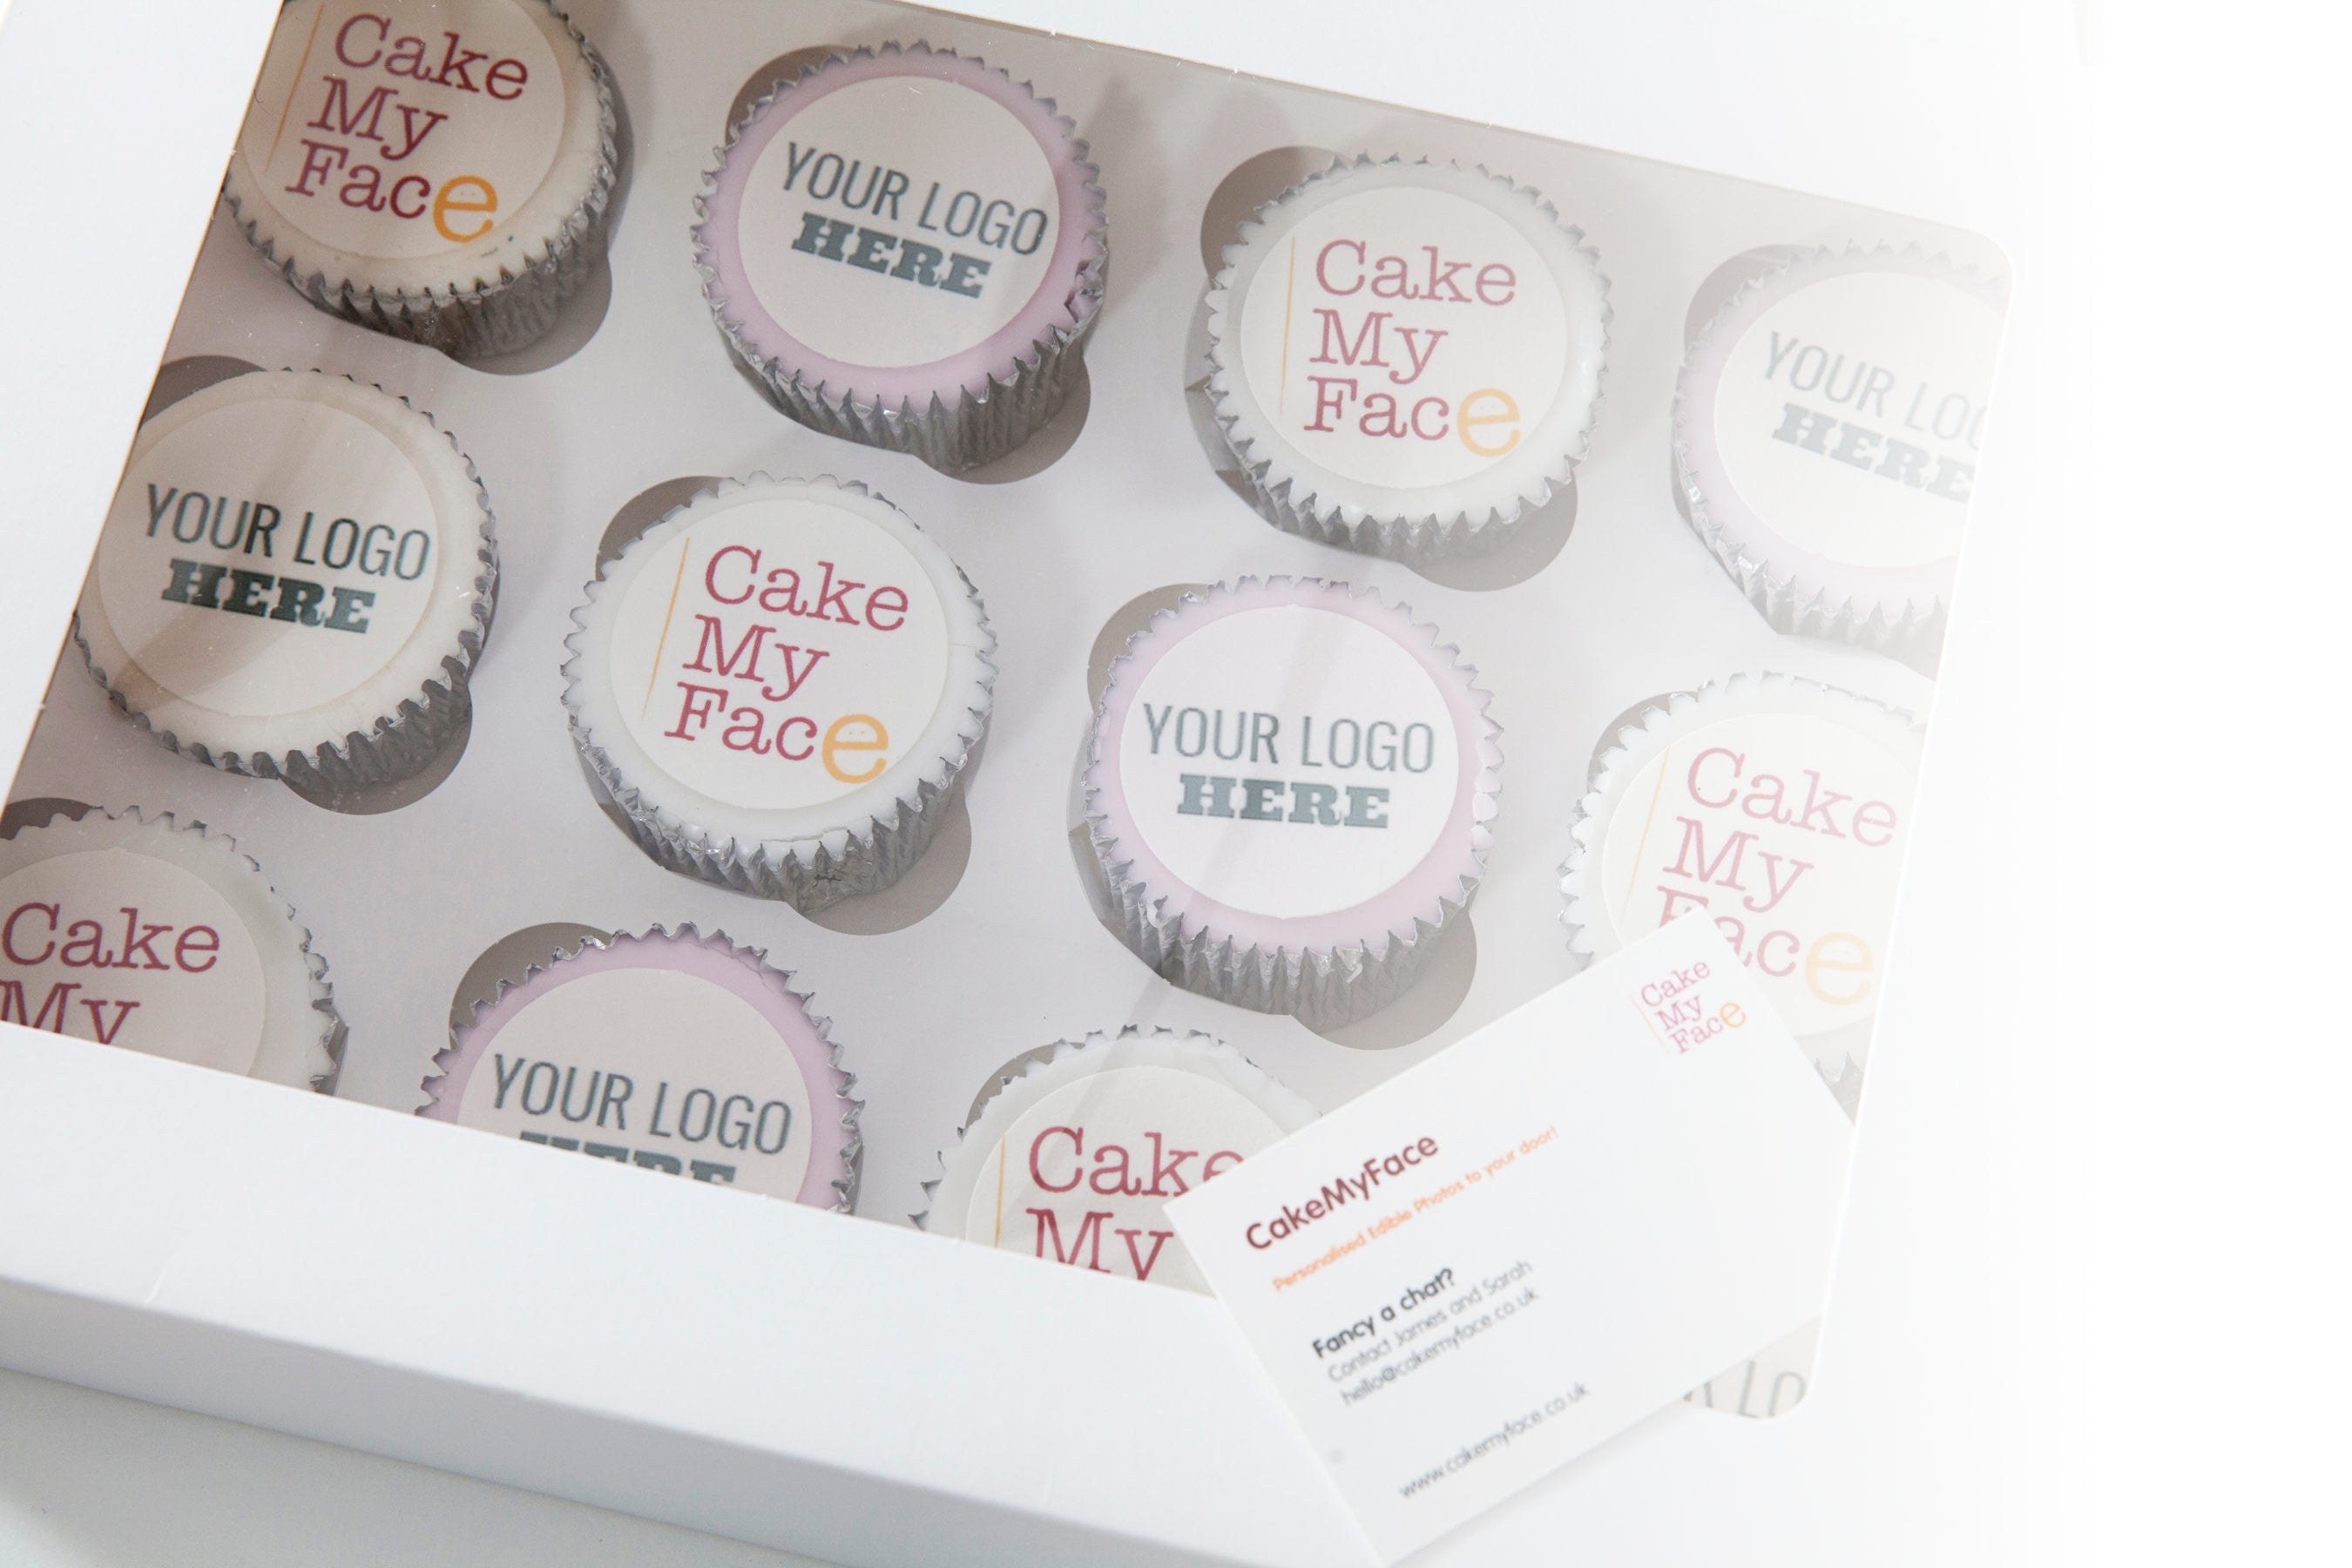 CakeMyFace Corporate Cupcakes